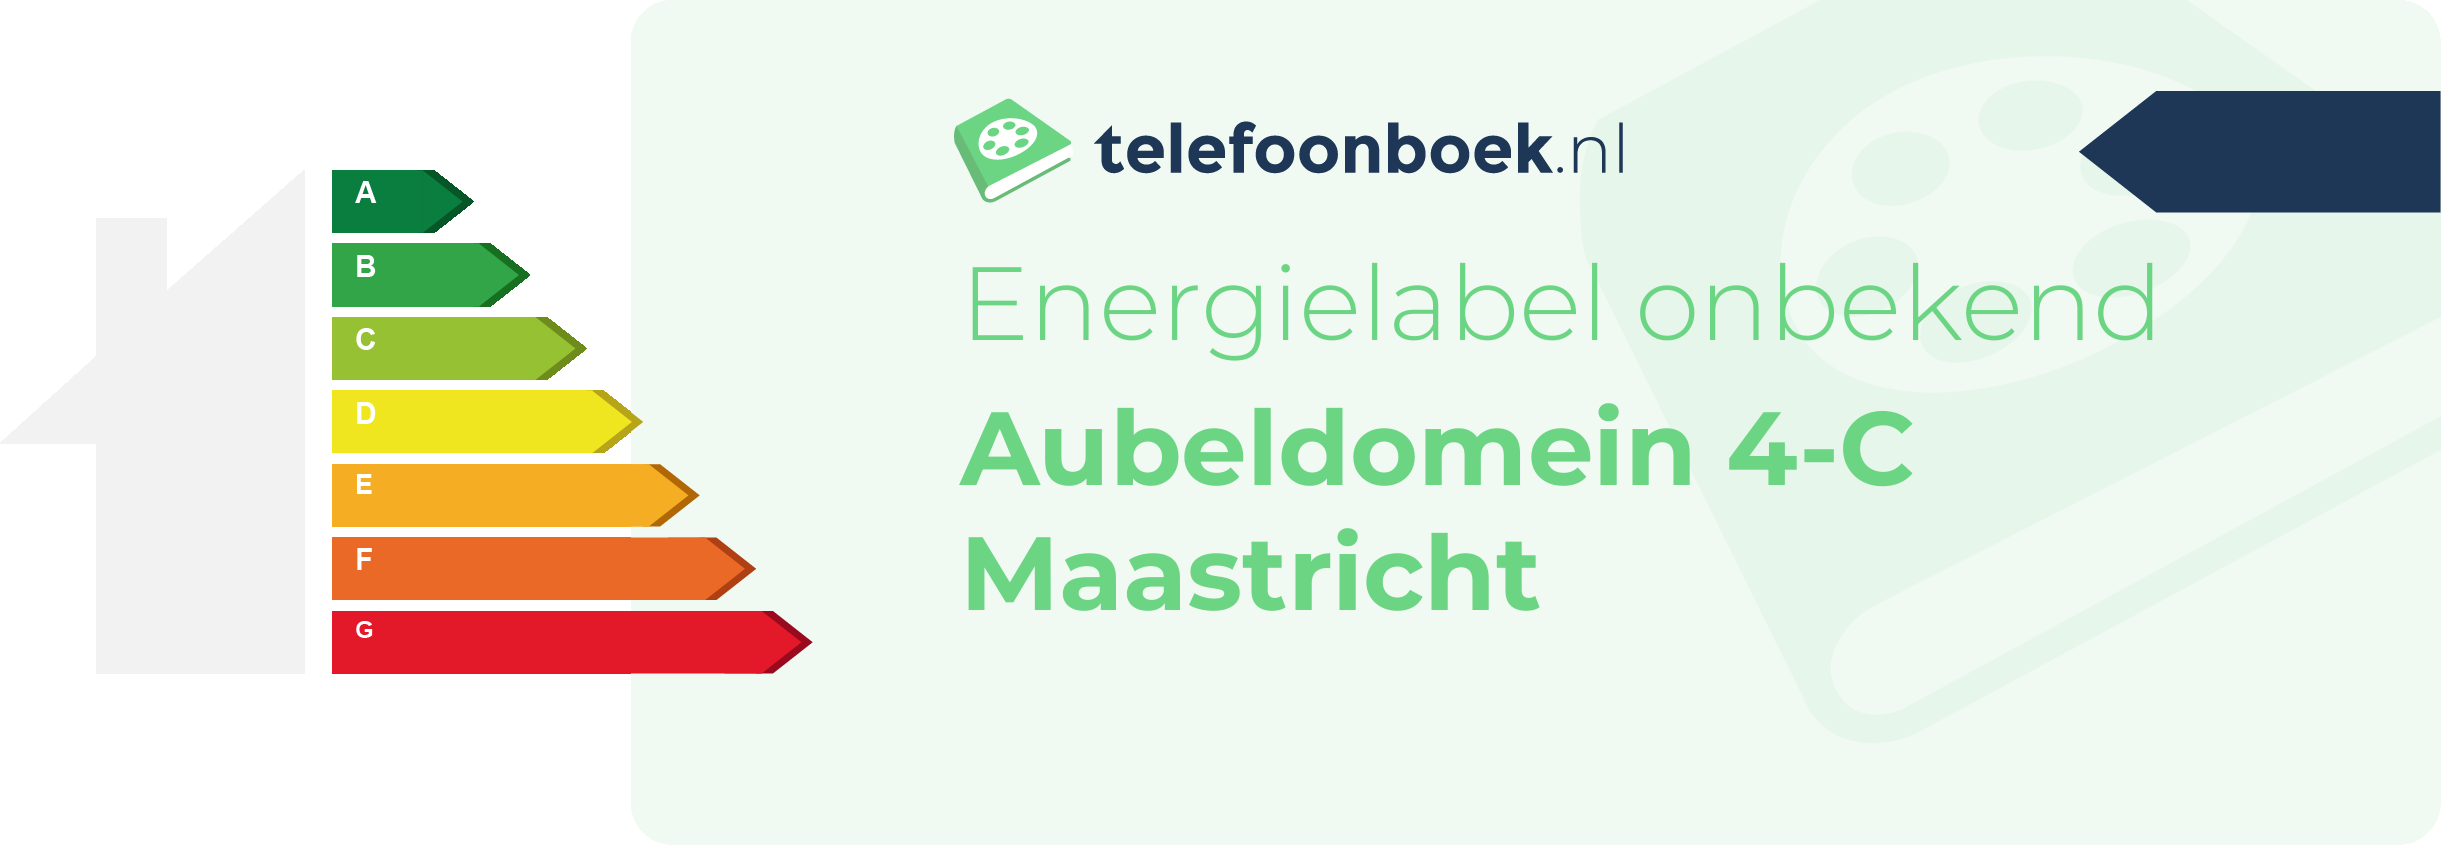 Energielabel Aubeldomein 4-C Maastricht